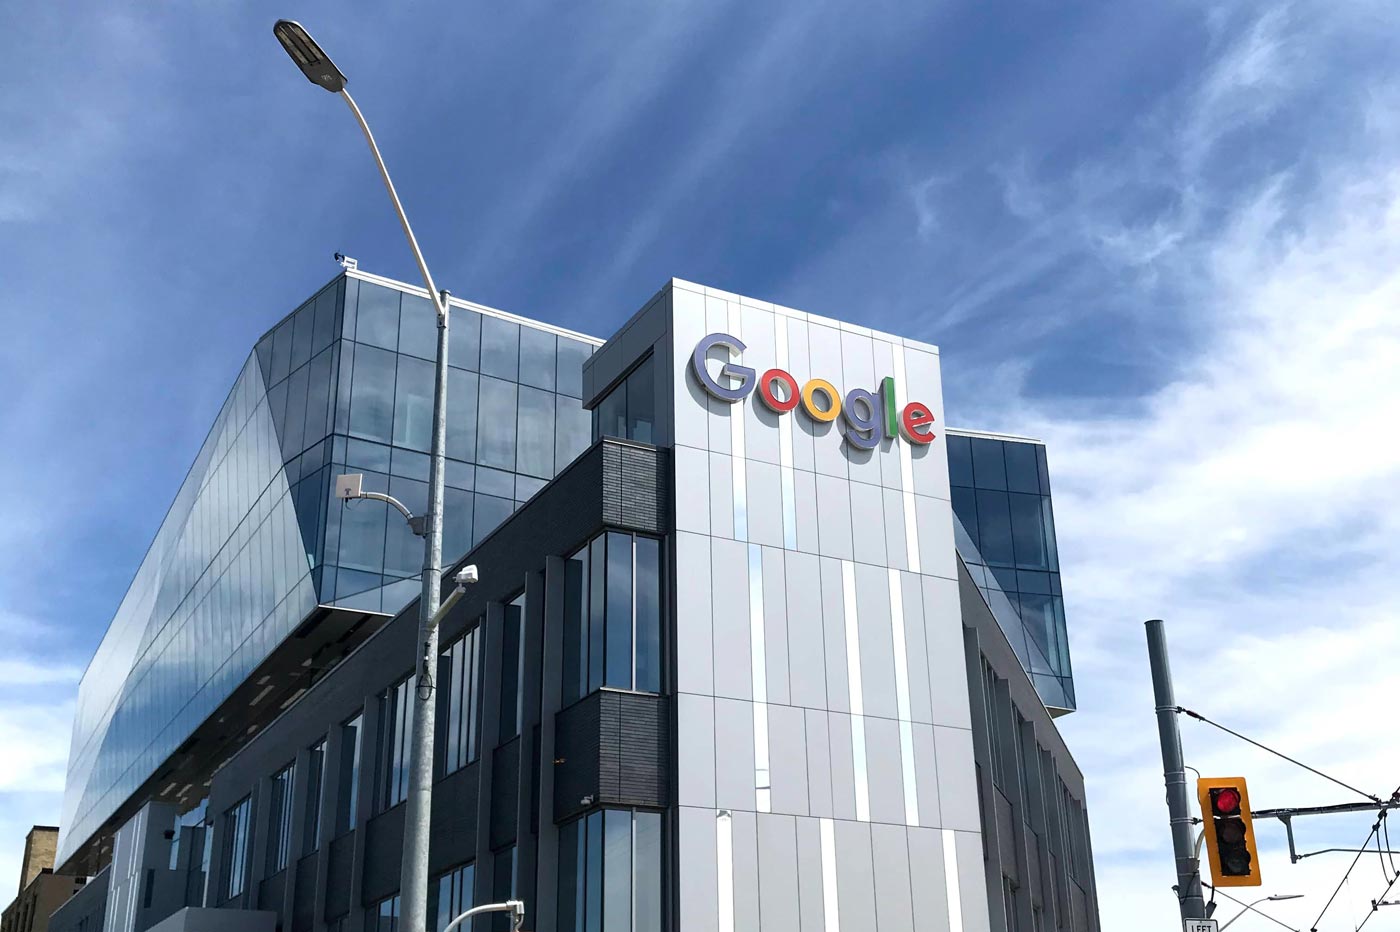 Google bâtiment